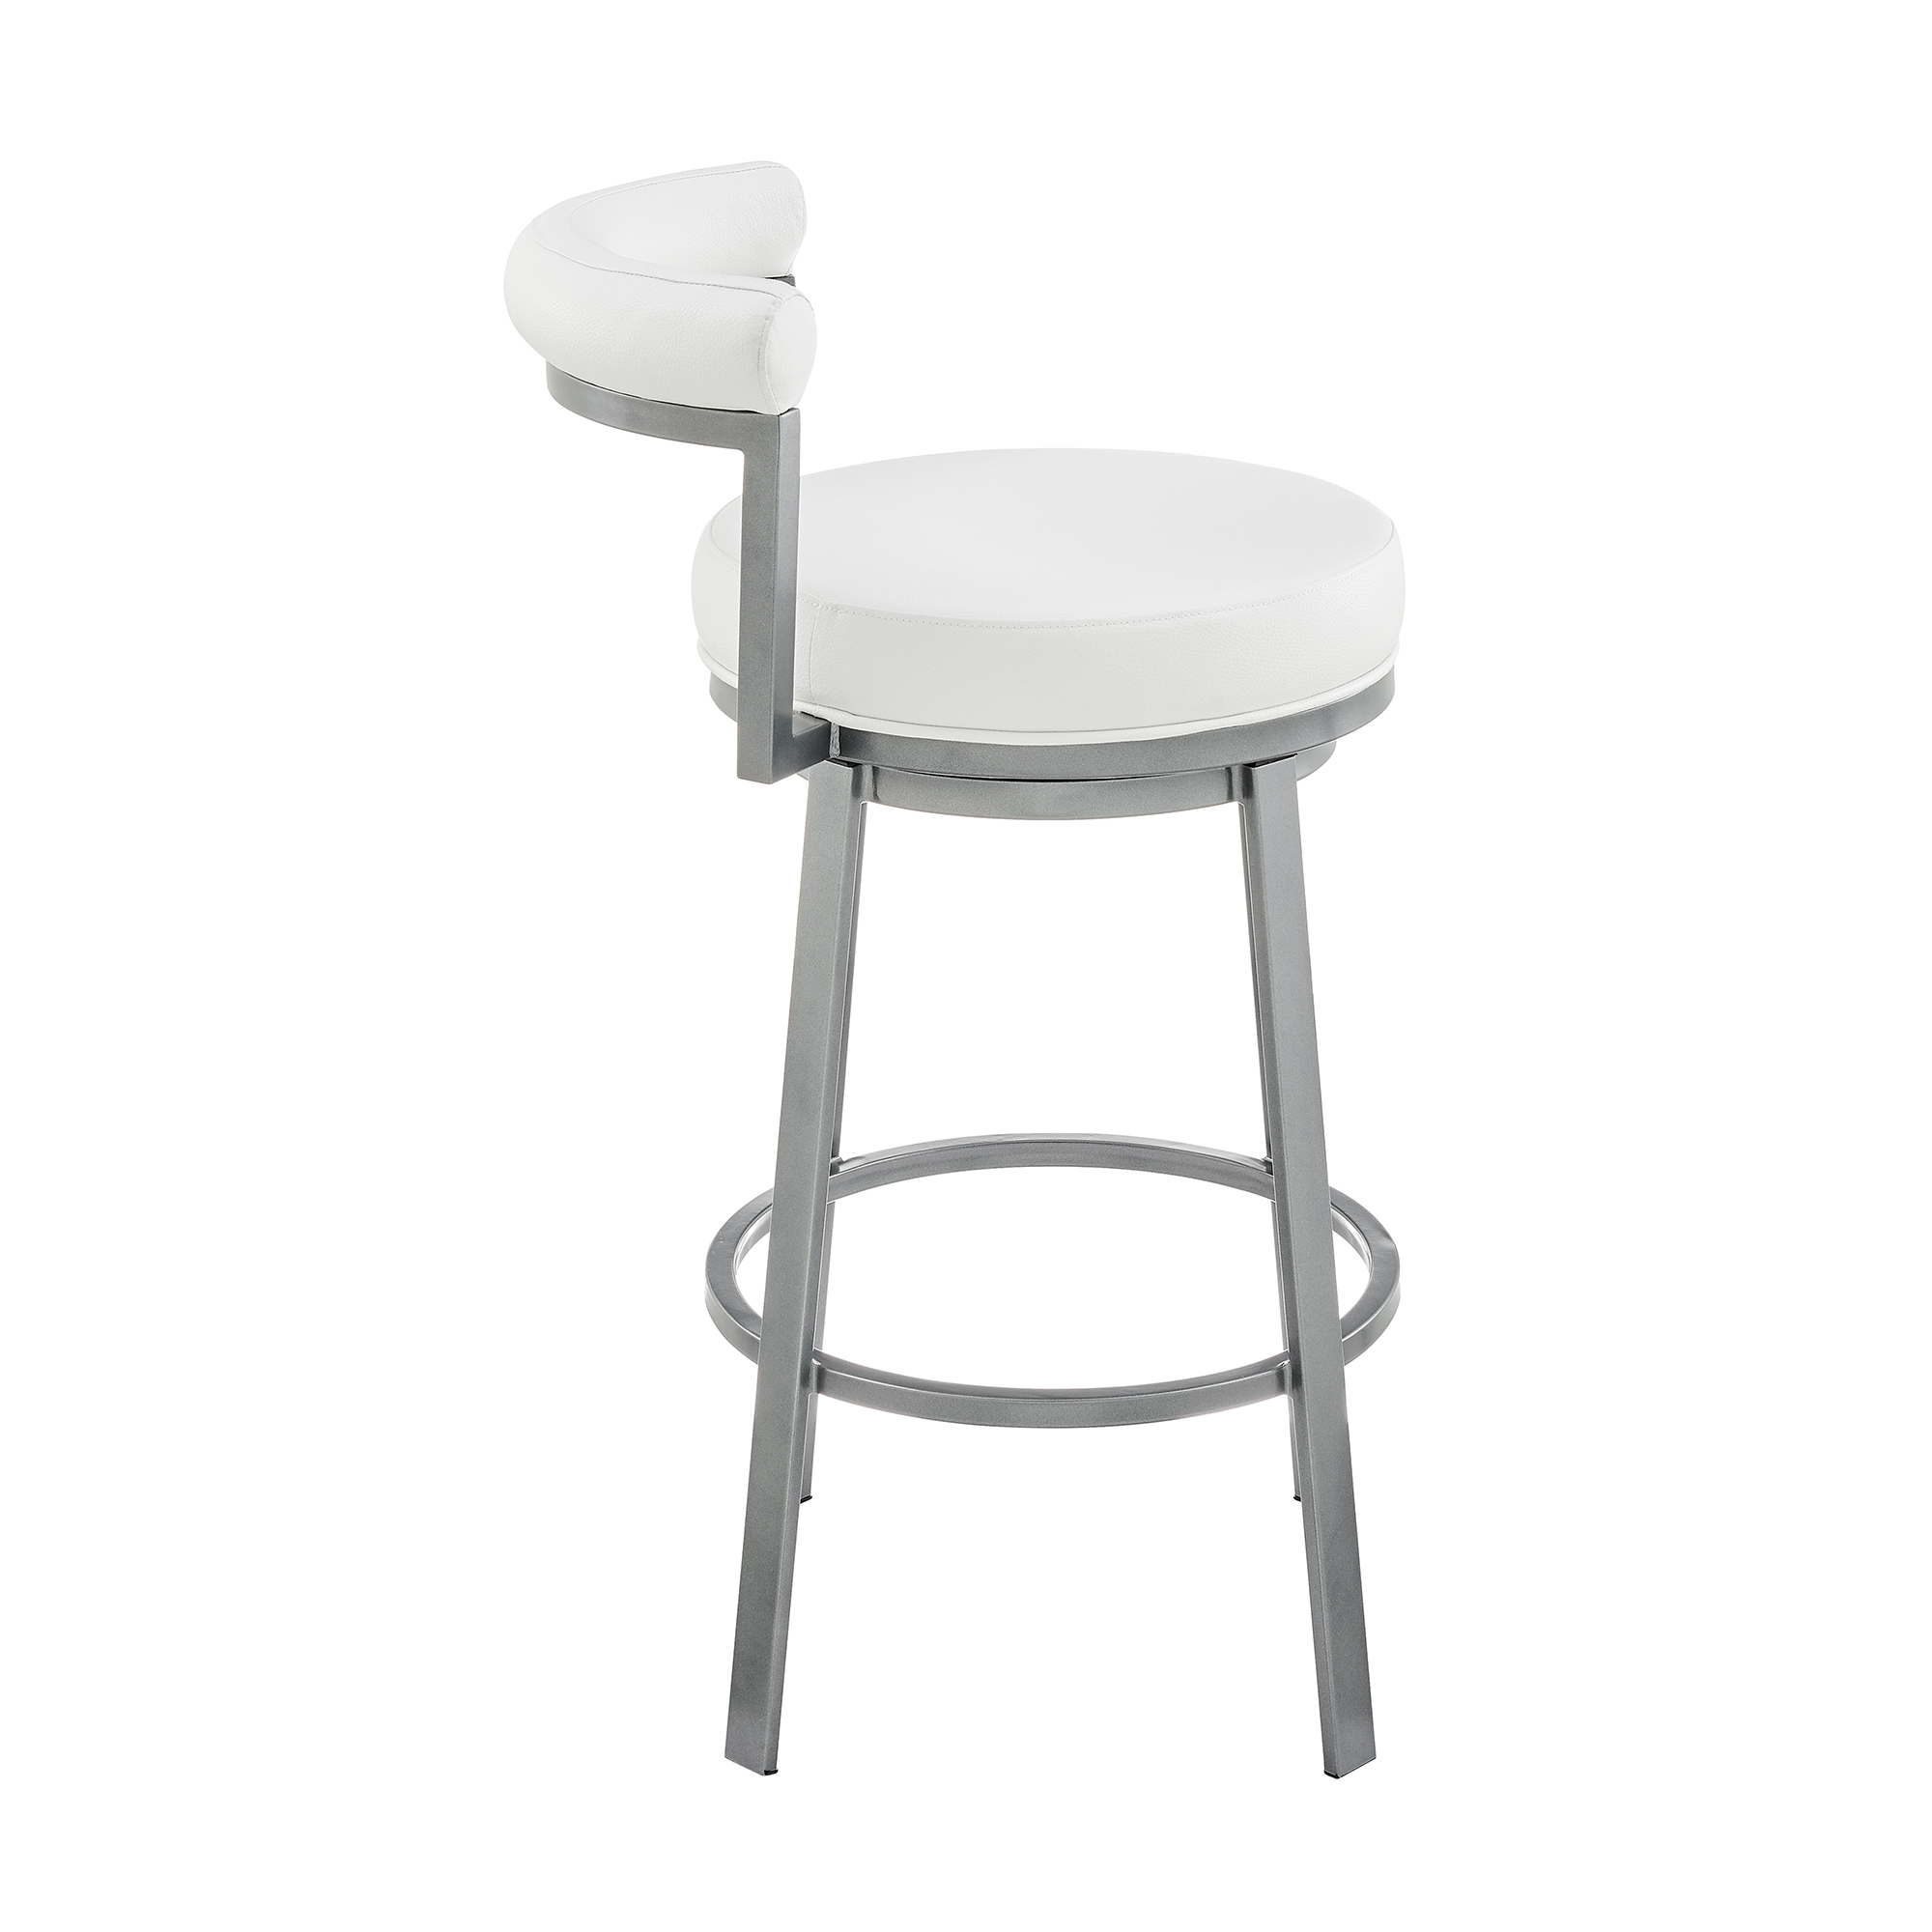 Elysha 26 Inch Swivel Counter Stool Chair, Round White Faux Leather Cushion- Saltoro Sherpi